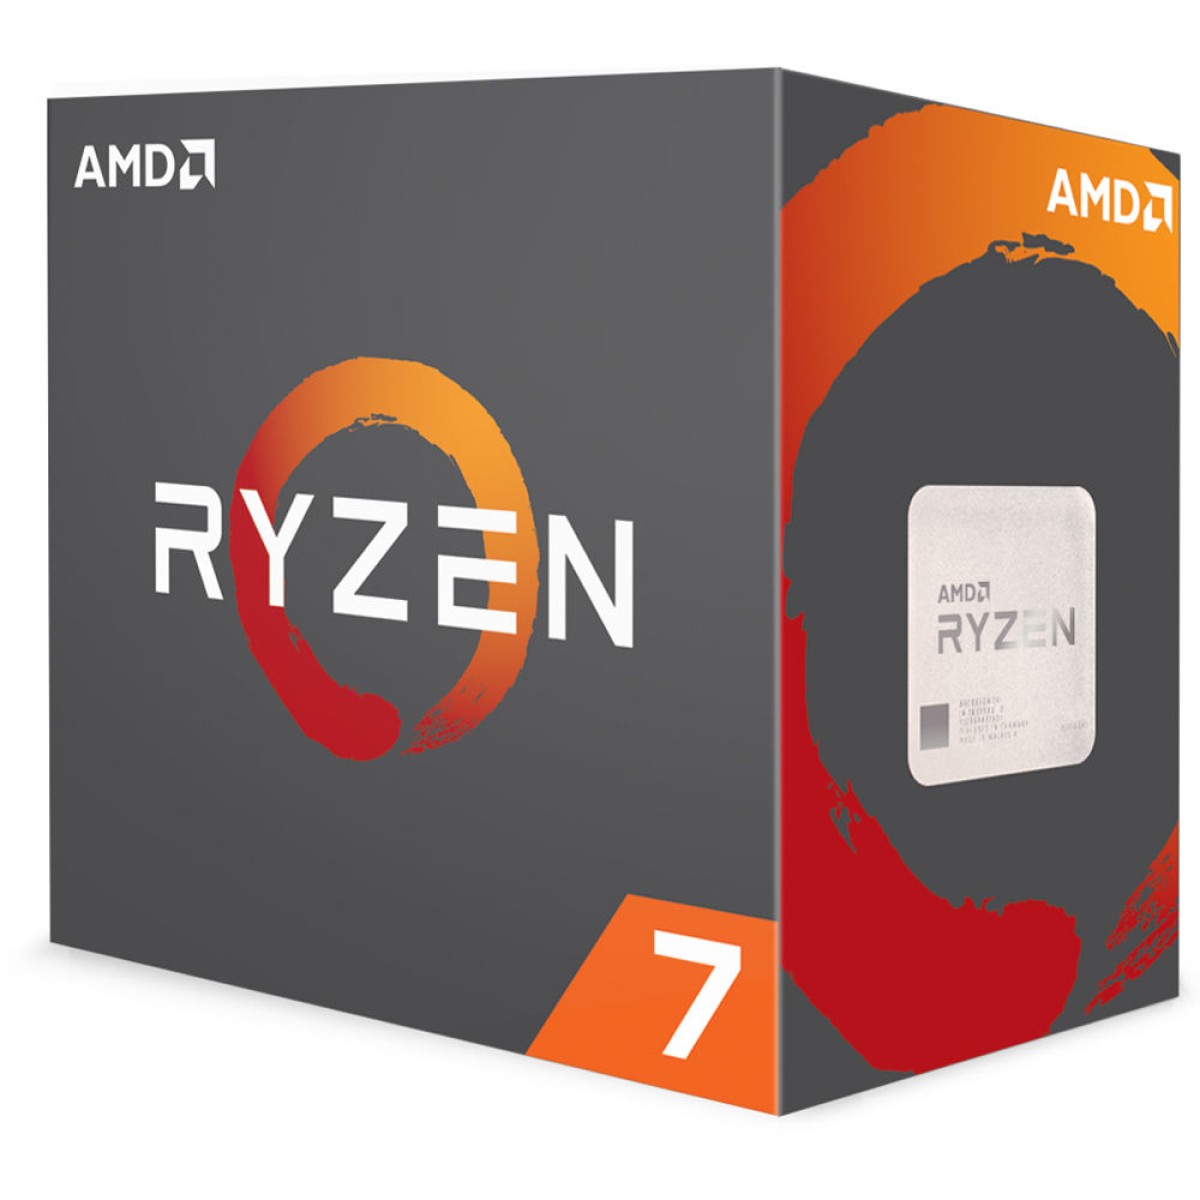 AMD RYZEN 7 1800x Processor